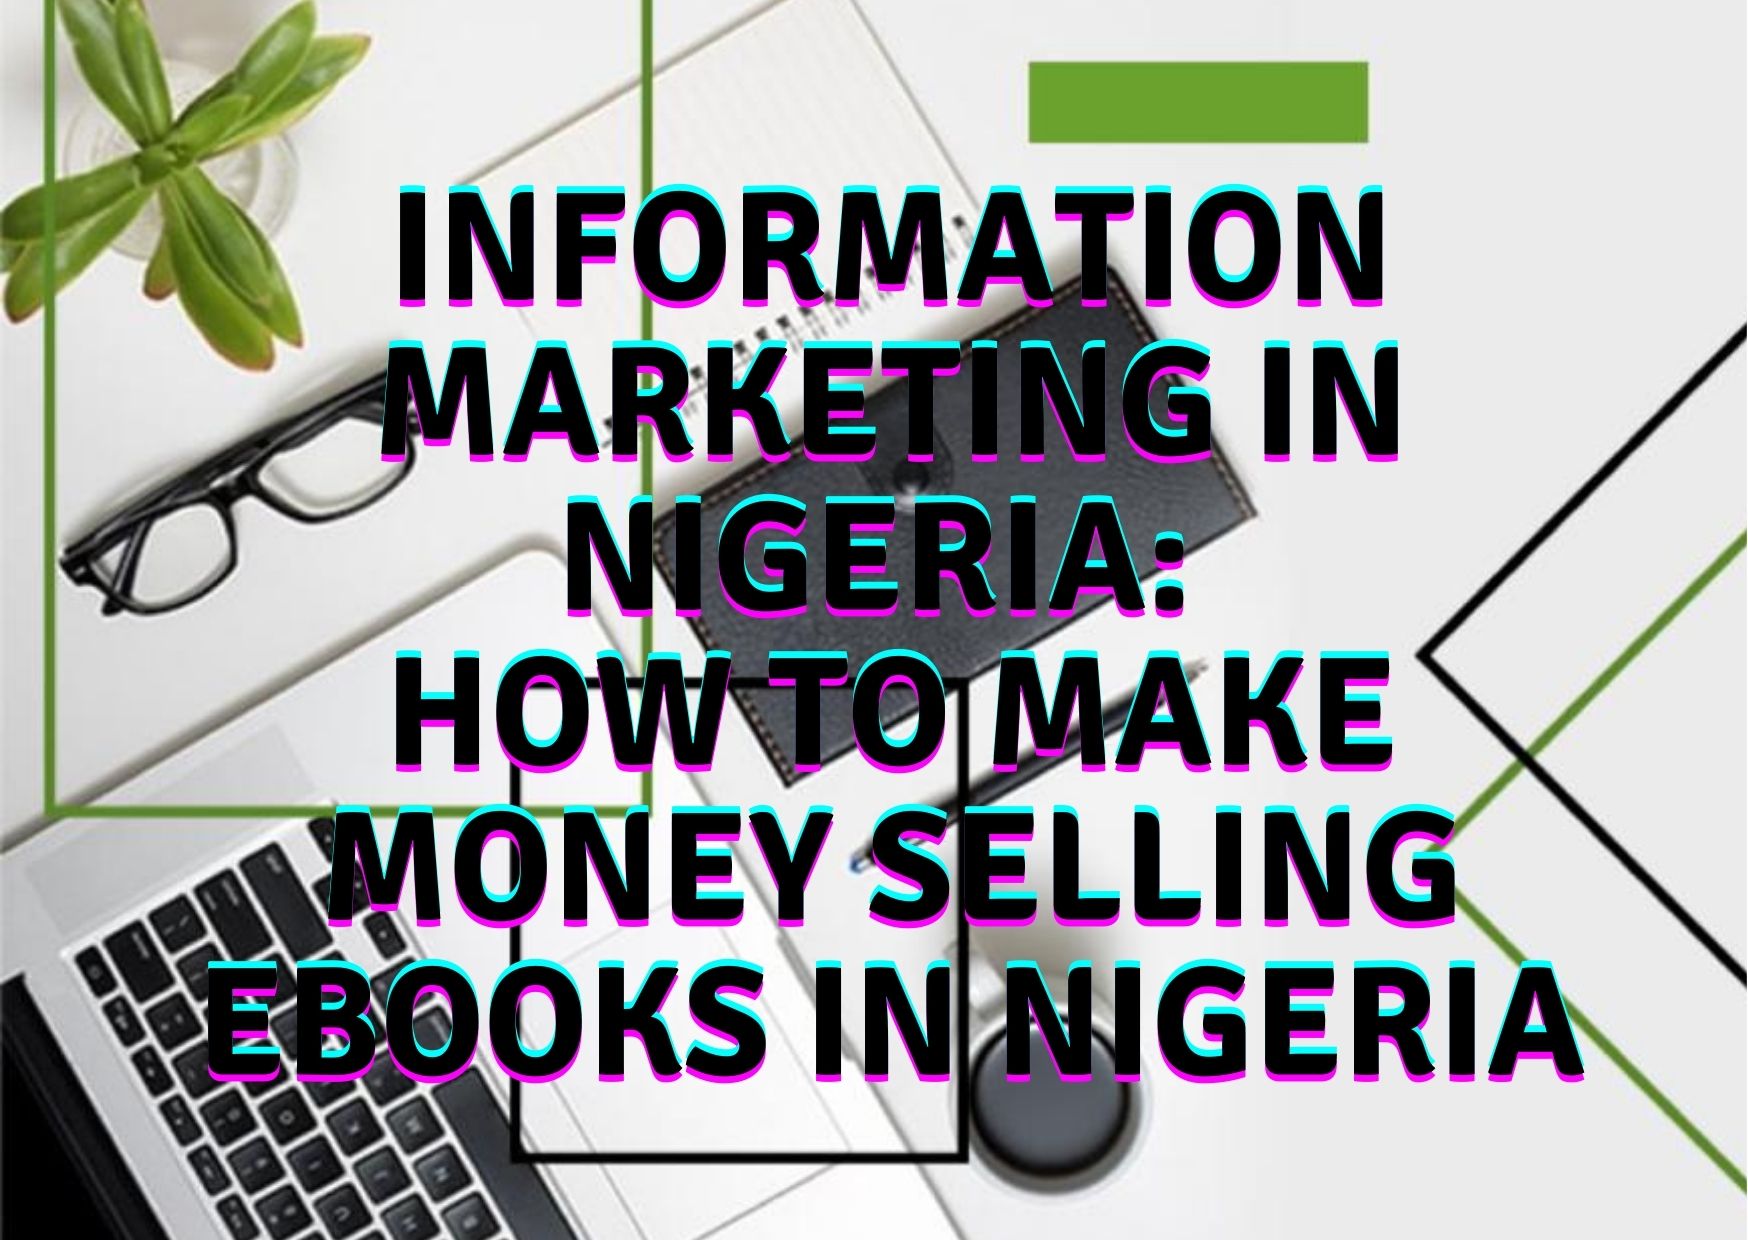 Information Marketing in Nigeria: How to make money selling ebooks in Nigeria